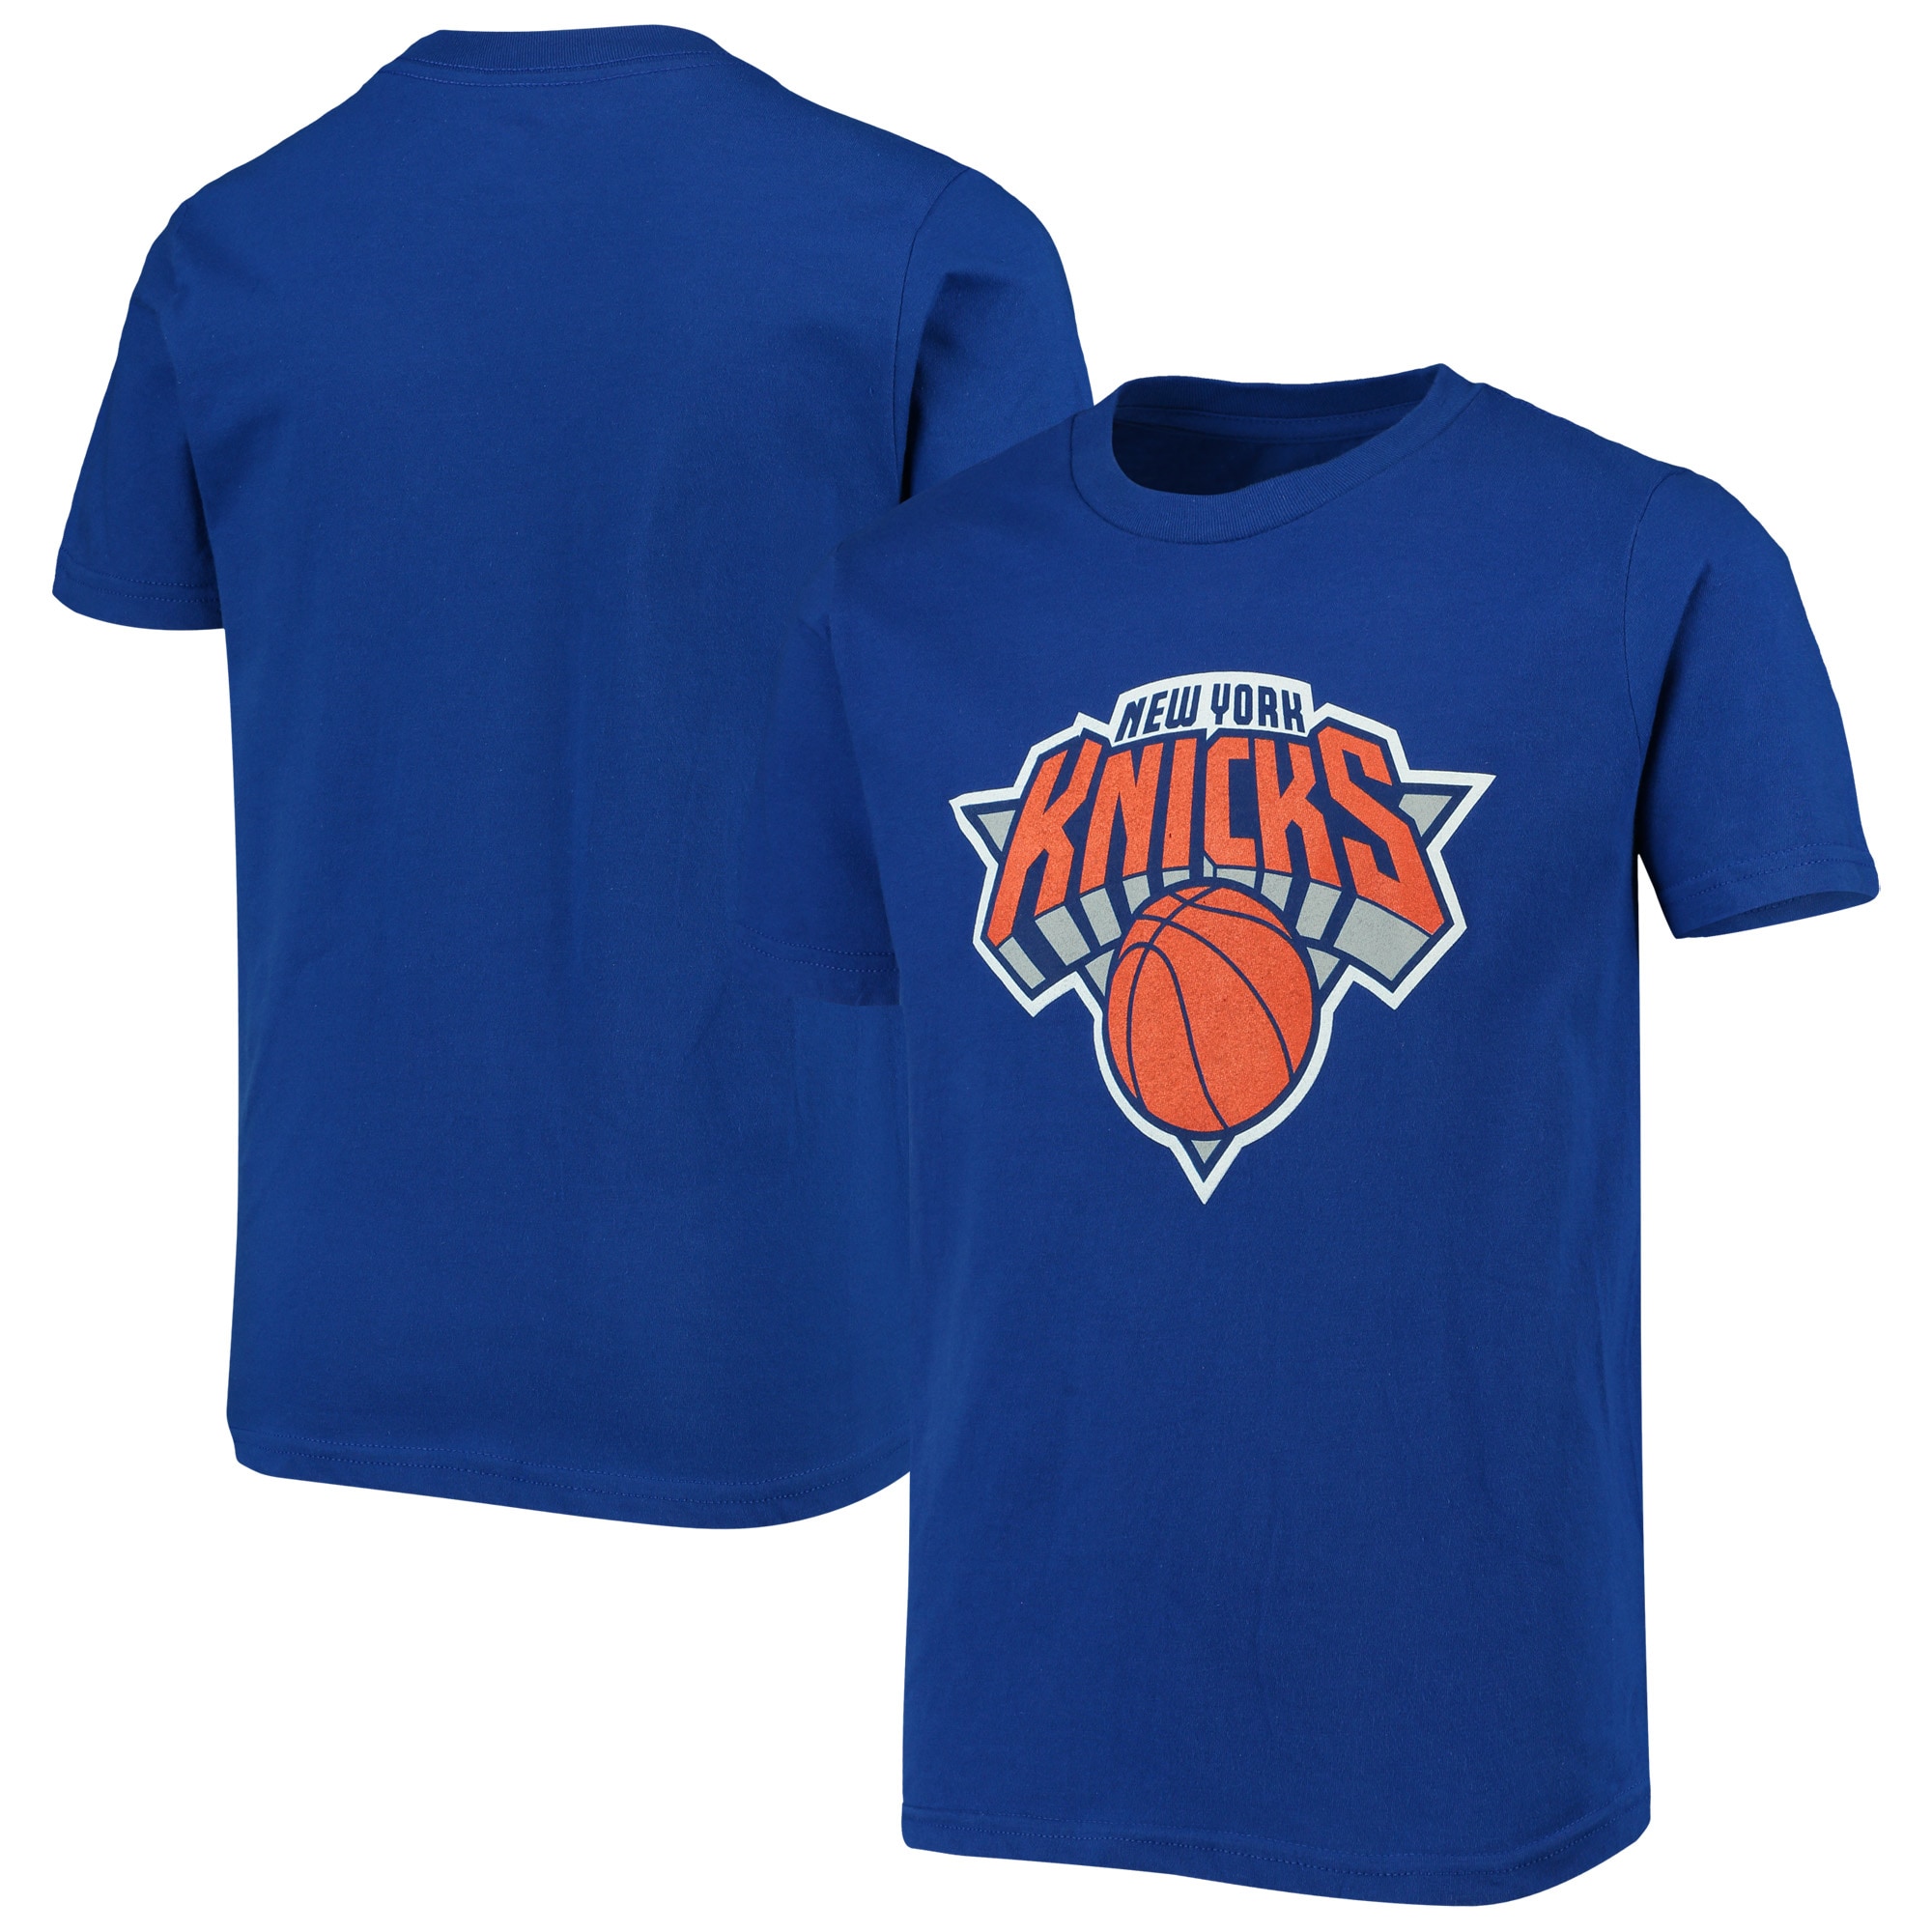 Men's Majestic Blue New York Knicks Victory Century T-Shirt - image 1 of 3